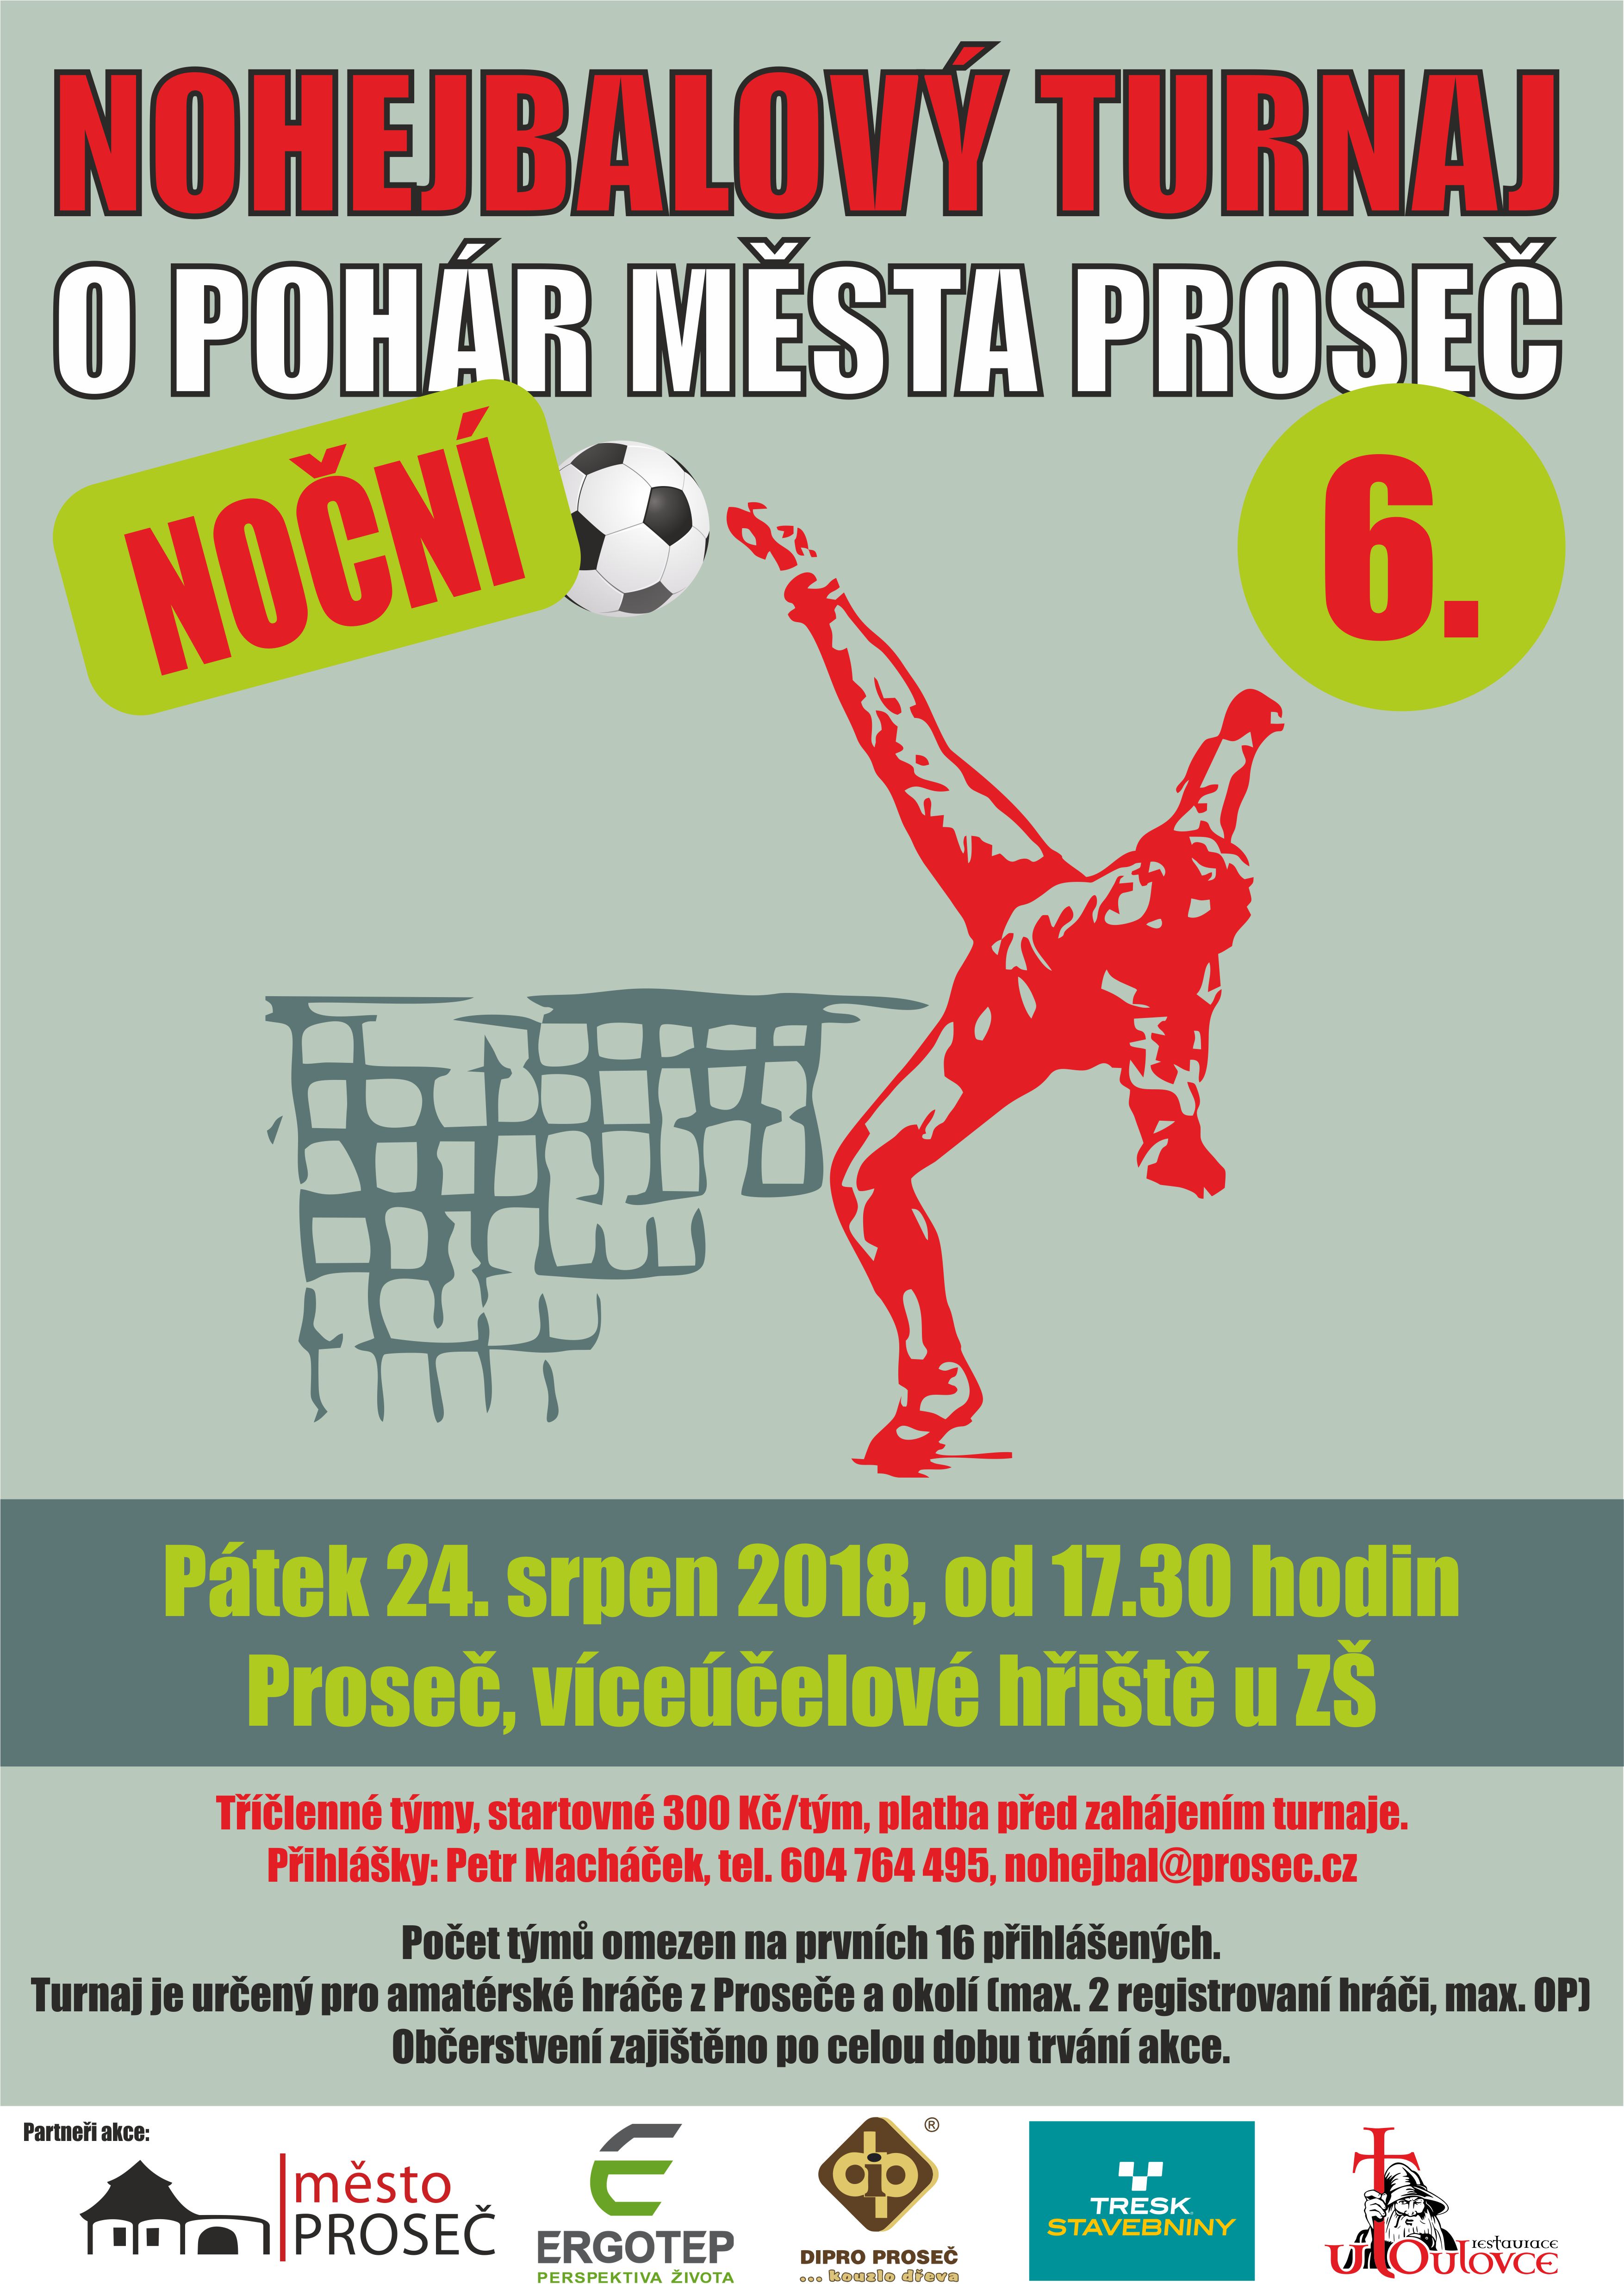 Noční nohejbalový turnaj: O pohár města Proseč